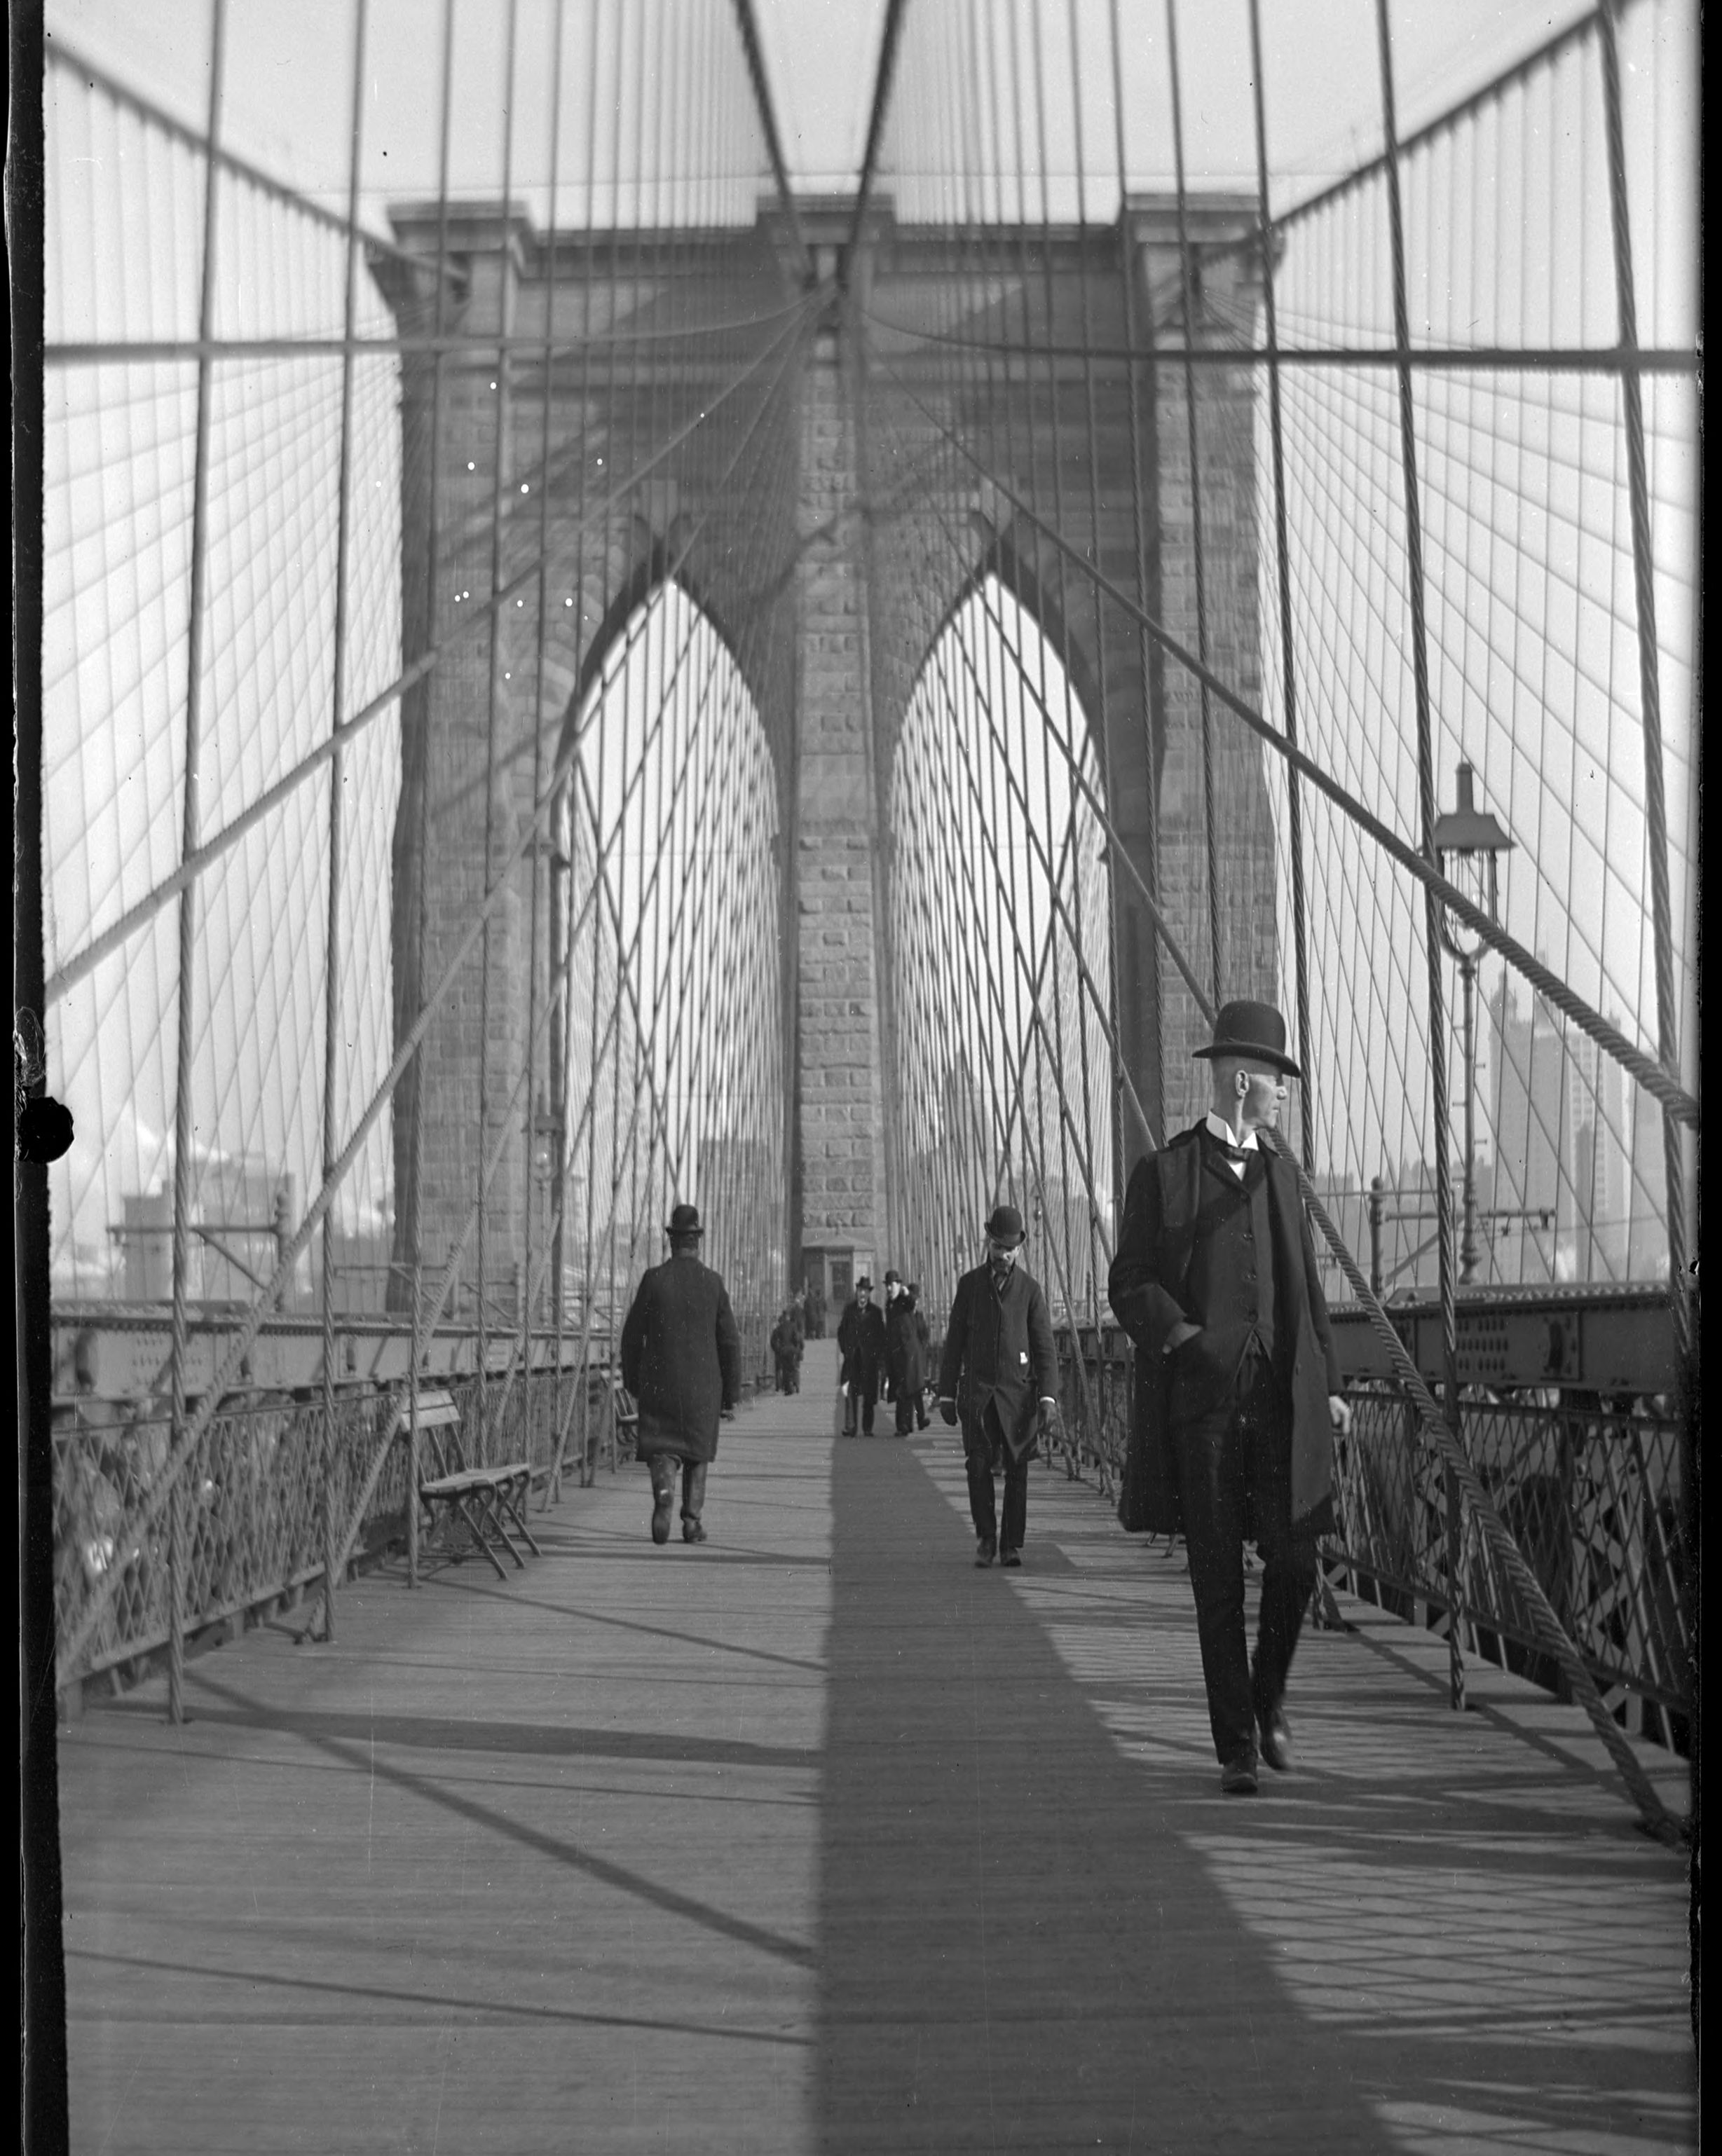 George Ehler Stonebridge, Man crossing the Brooklyn Bridge in winter, New York City, c. 1897-1905. Glass negative. New-York Historical Society.